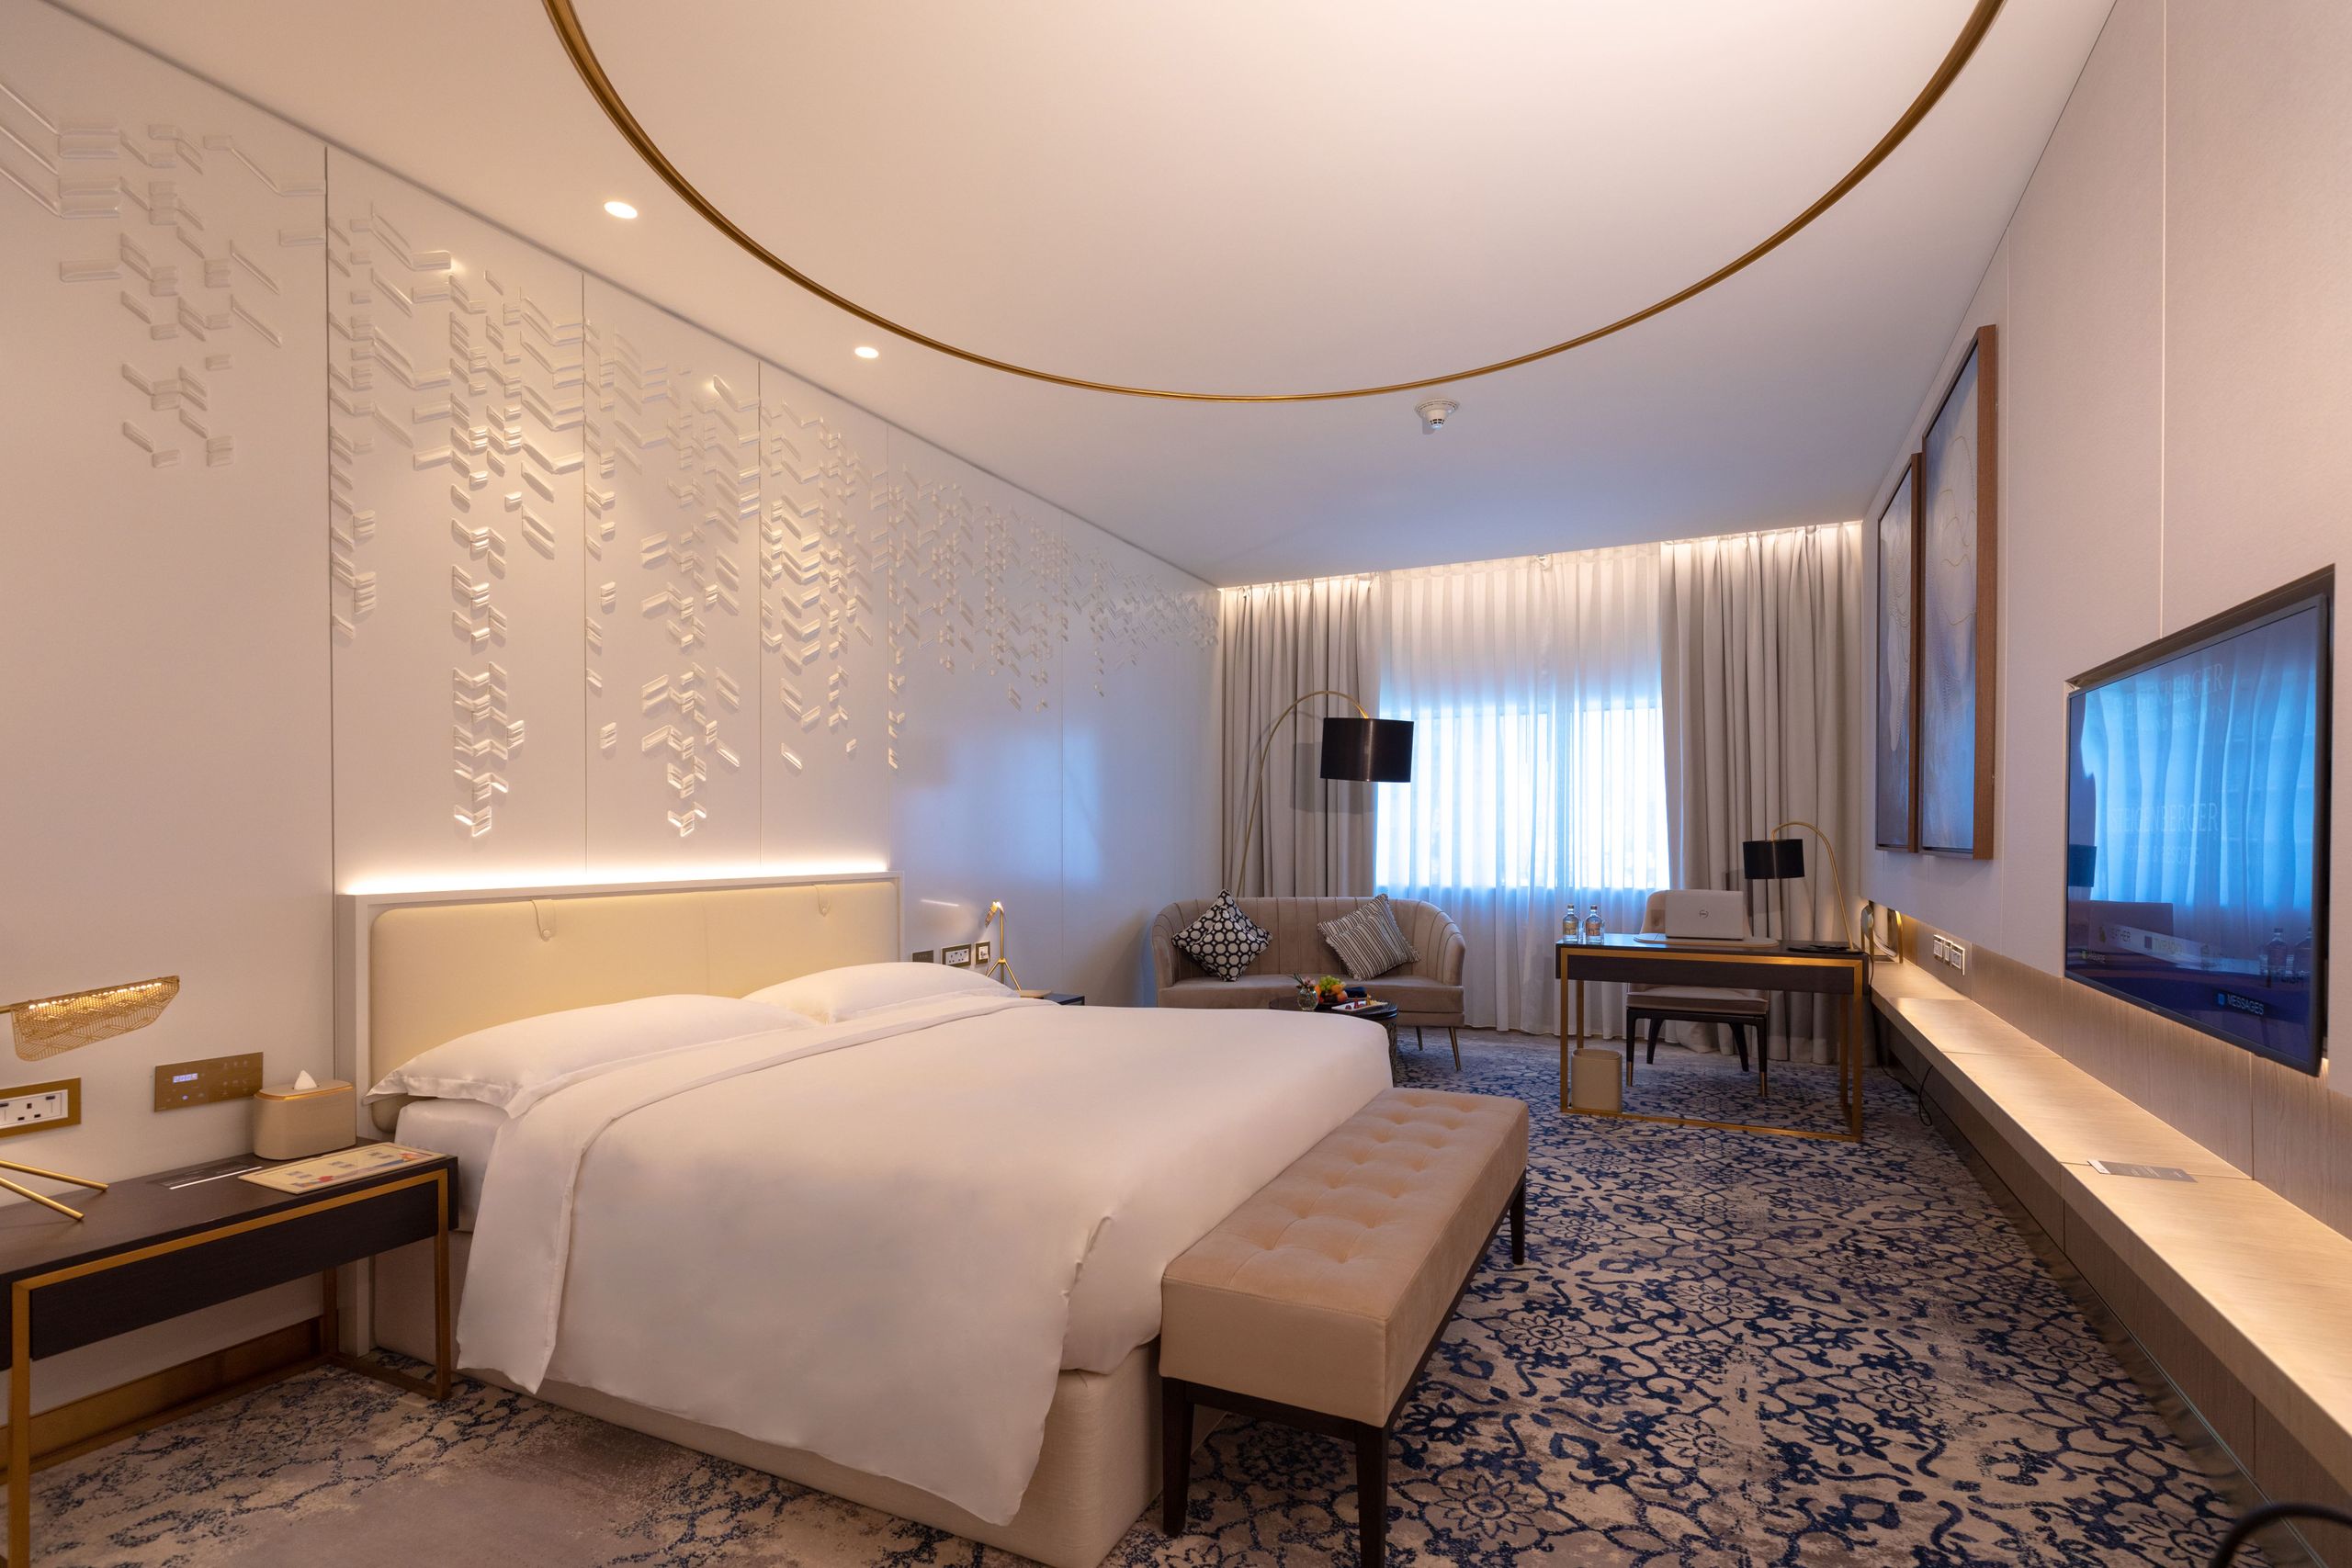 Hotel in Doha - Steigenberger Hotel Doha - Bedroom